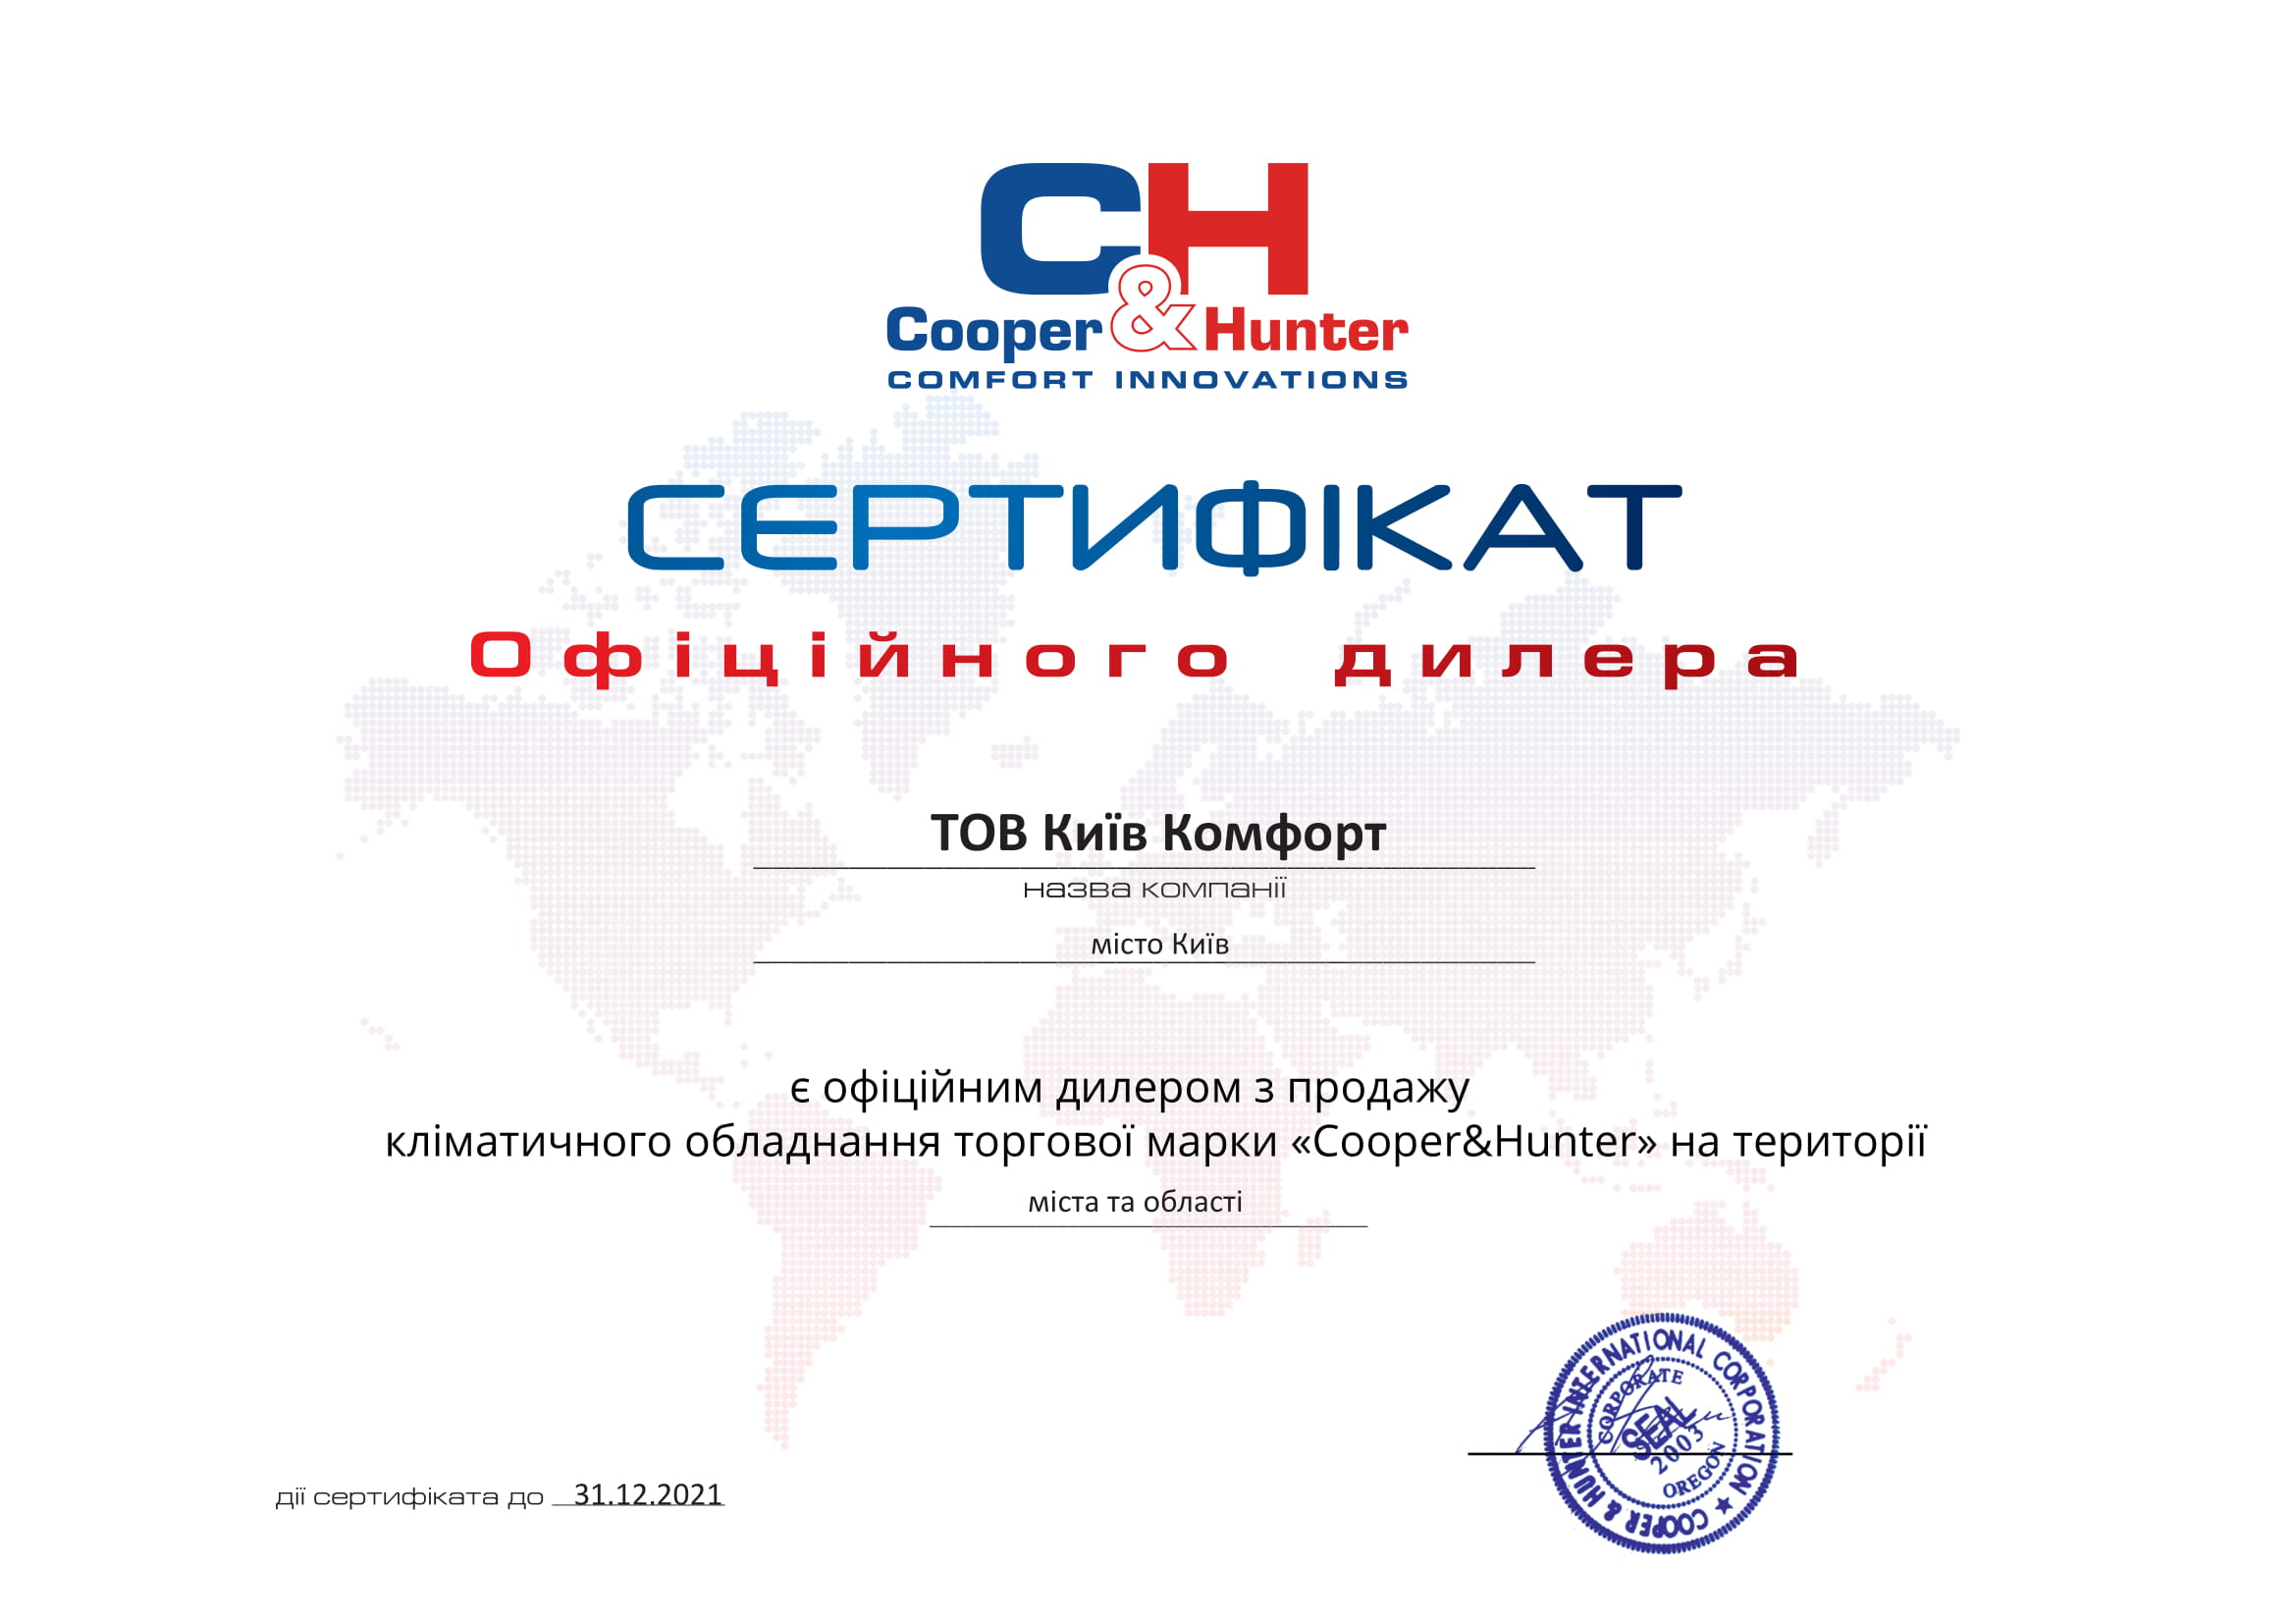 Сертификат Cooper&Hunter 2020